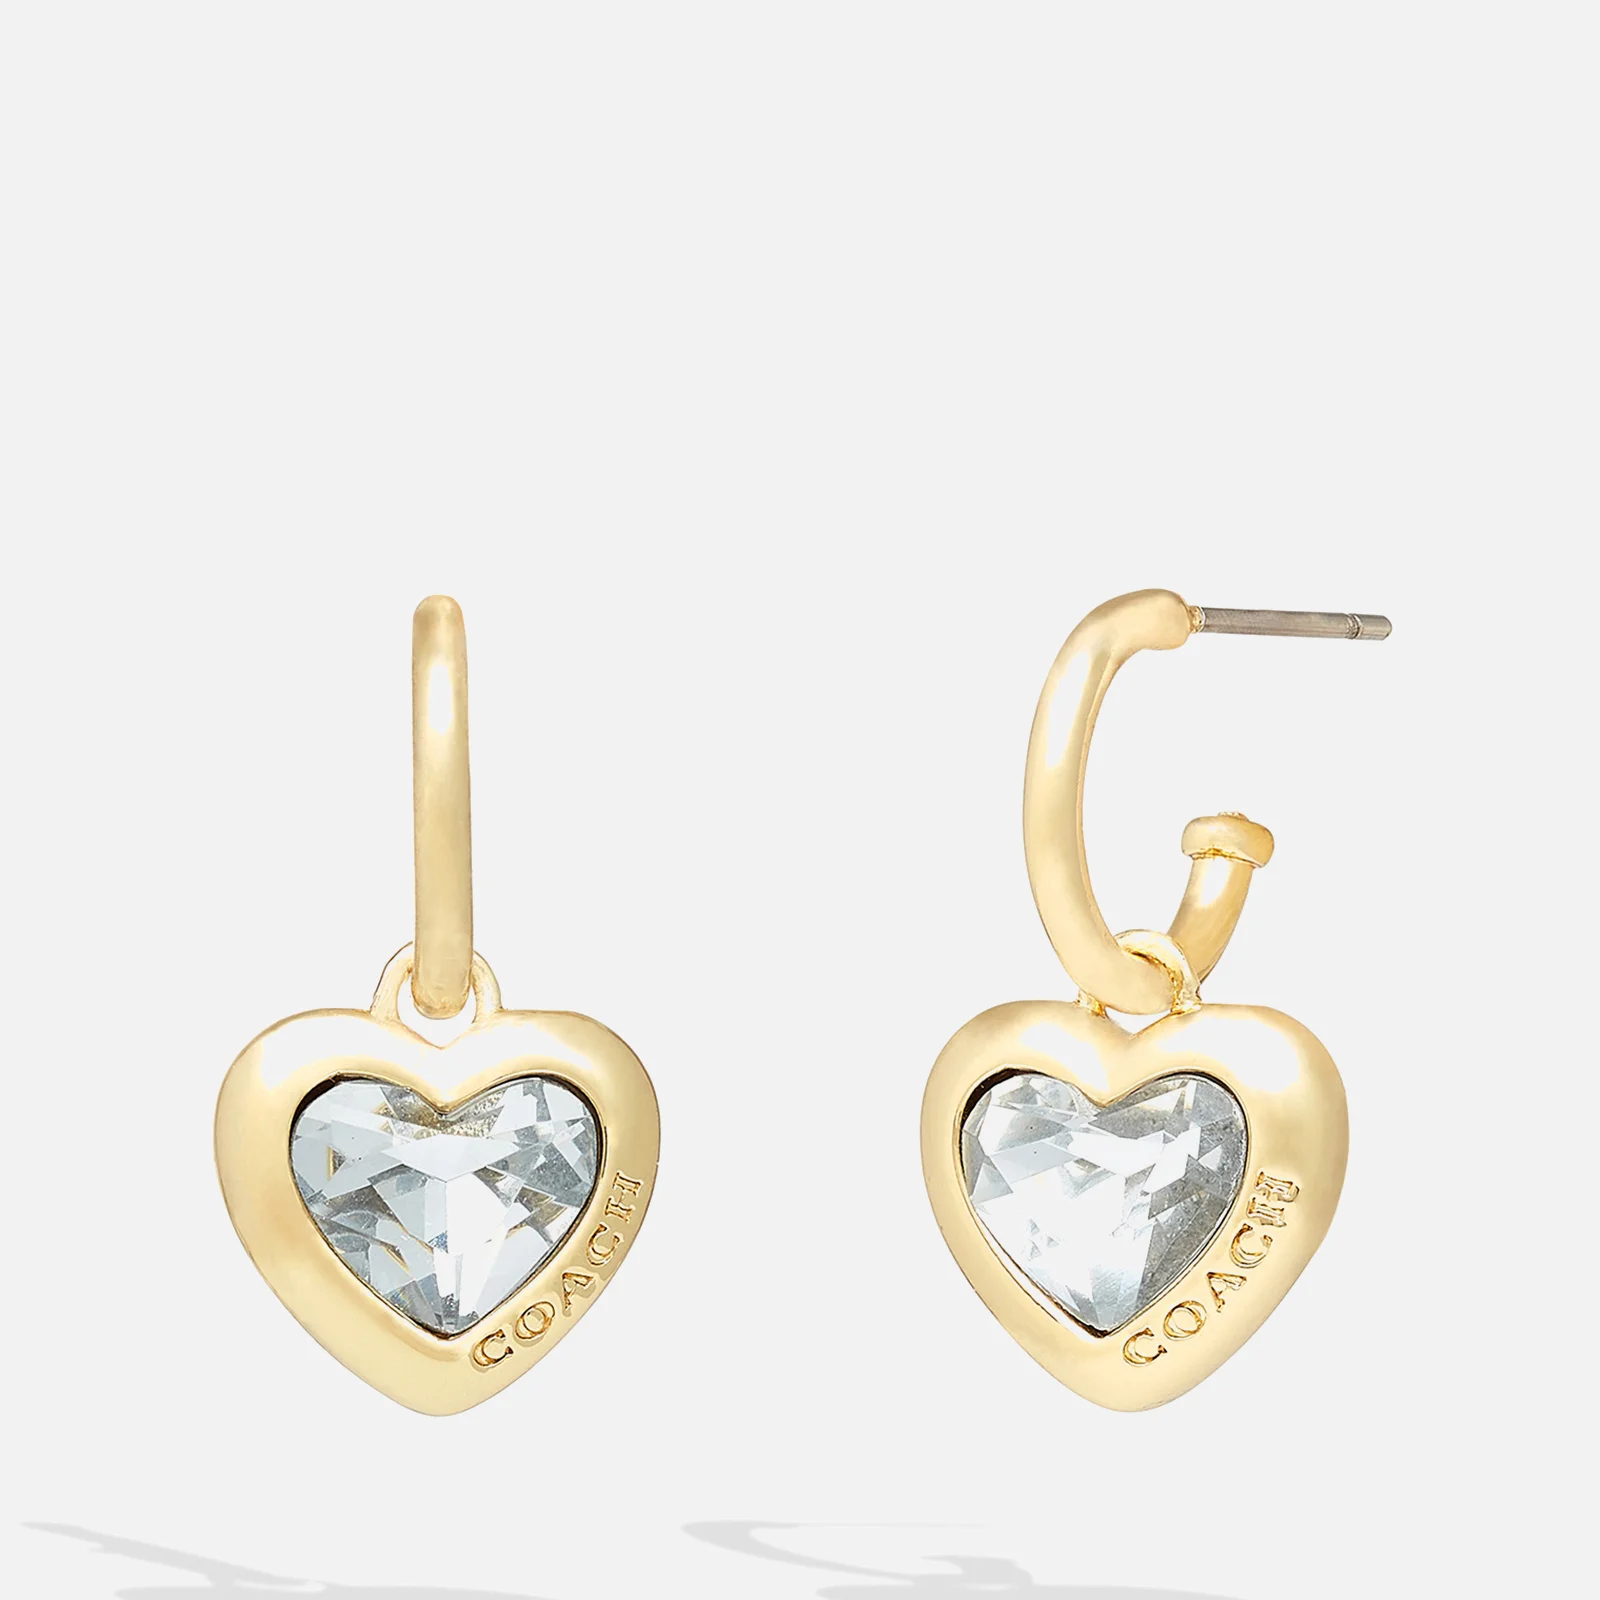 Coach Women's Heart Gold Tone Charm Huggie Earrings - Gold/Clear Image 1